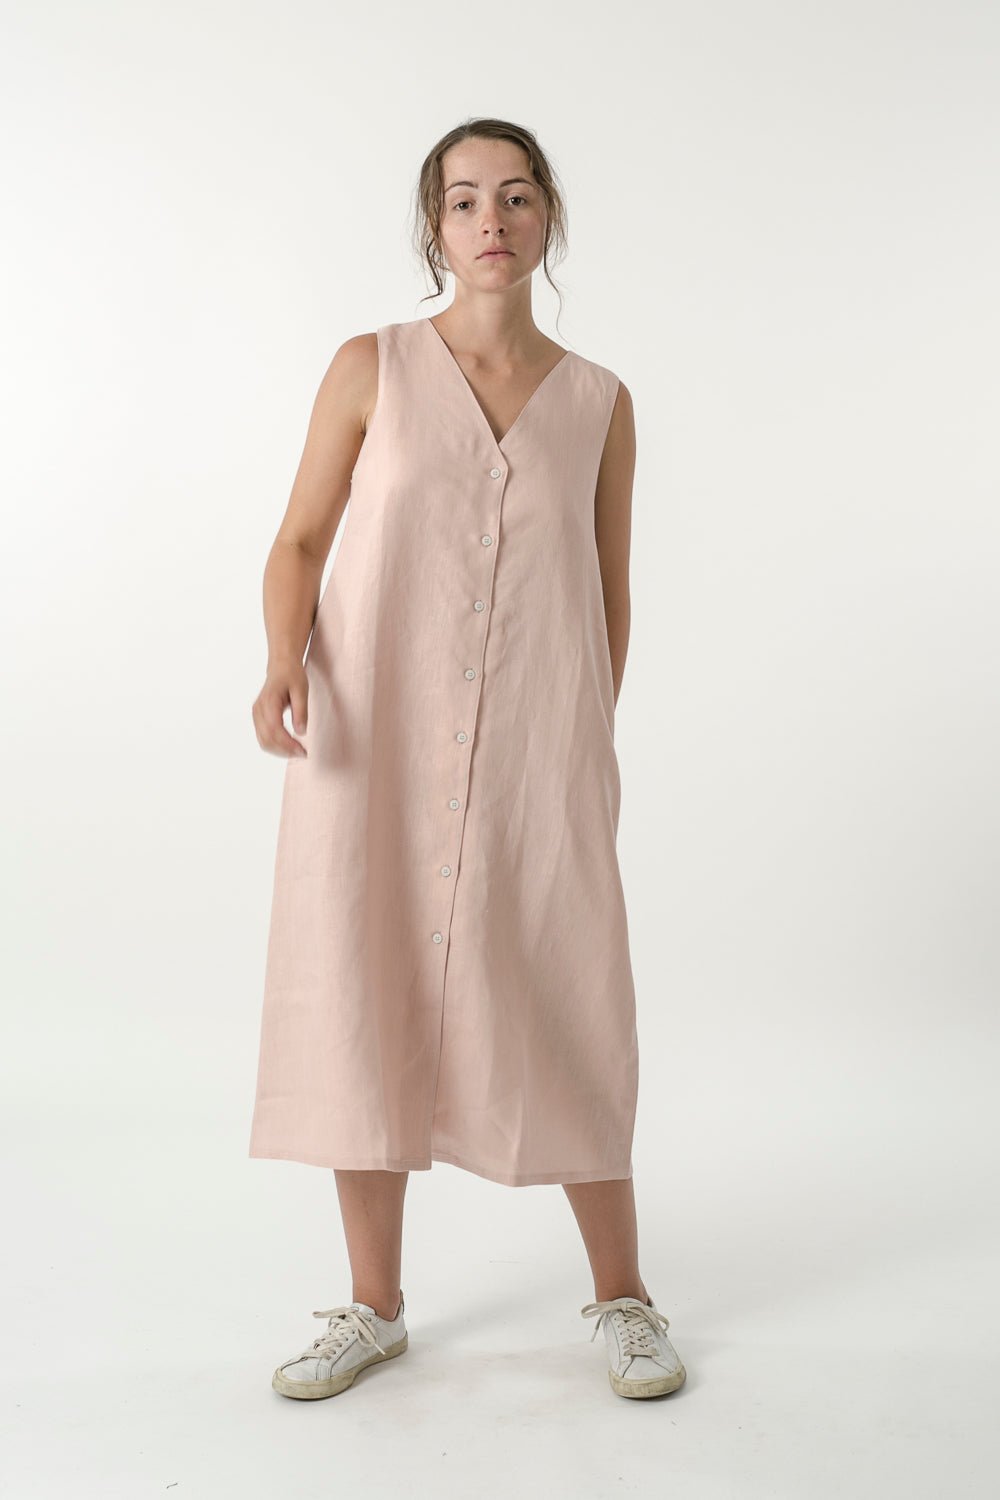 Hemp Linen Button V Dress - Ensemble Studios